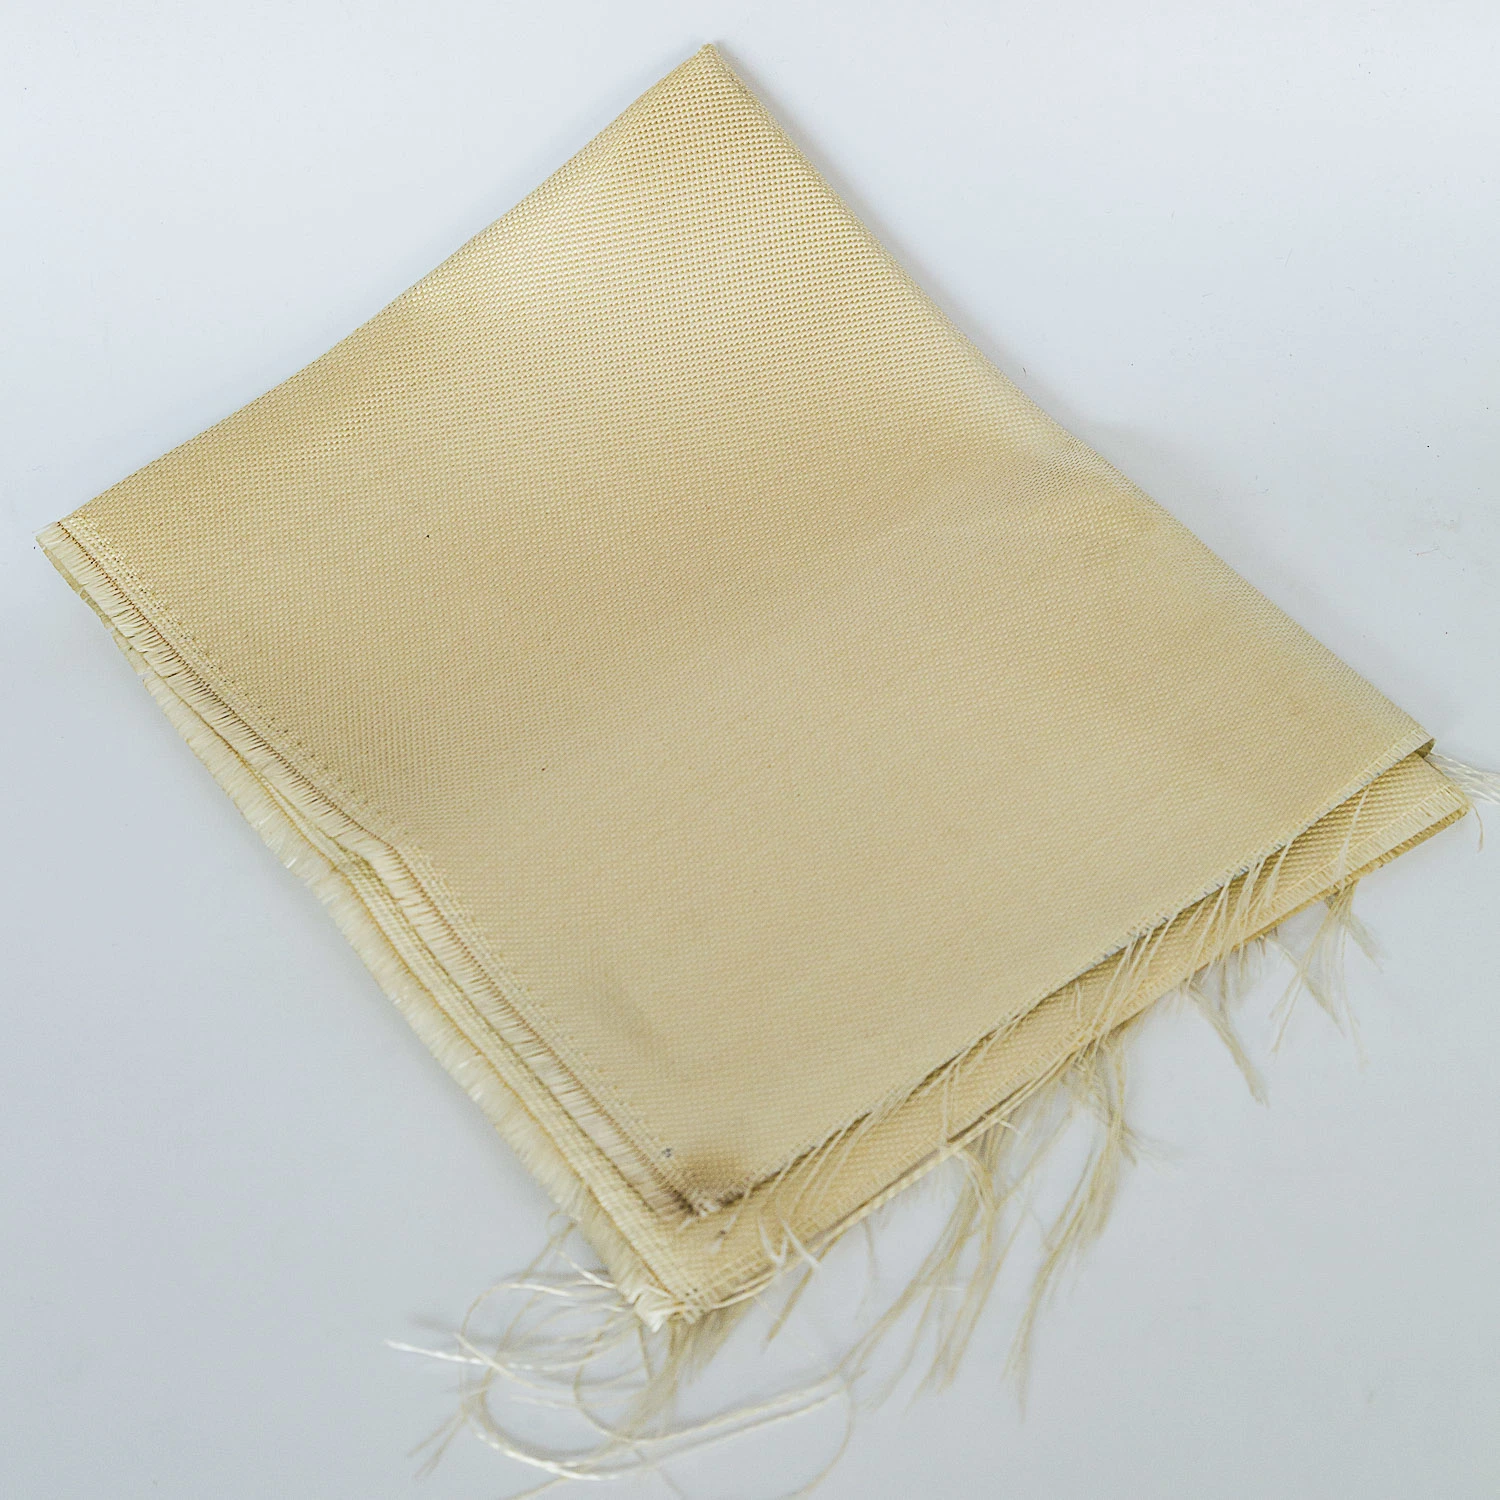 Silicone Impregnated Fiberglass Cloth for Insulation Jackets, Mattress, Pad